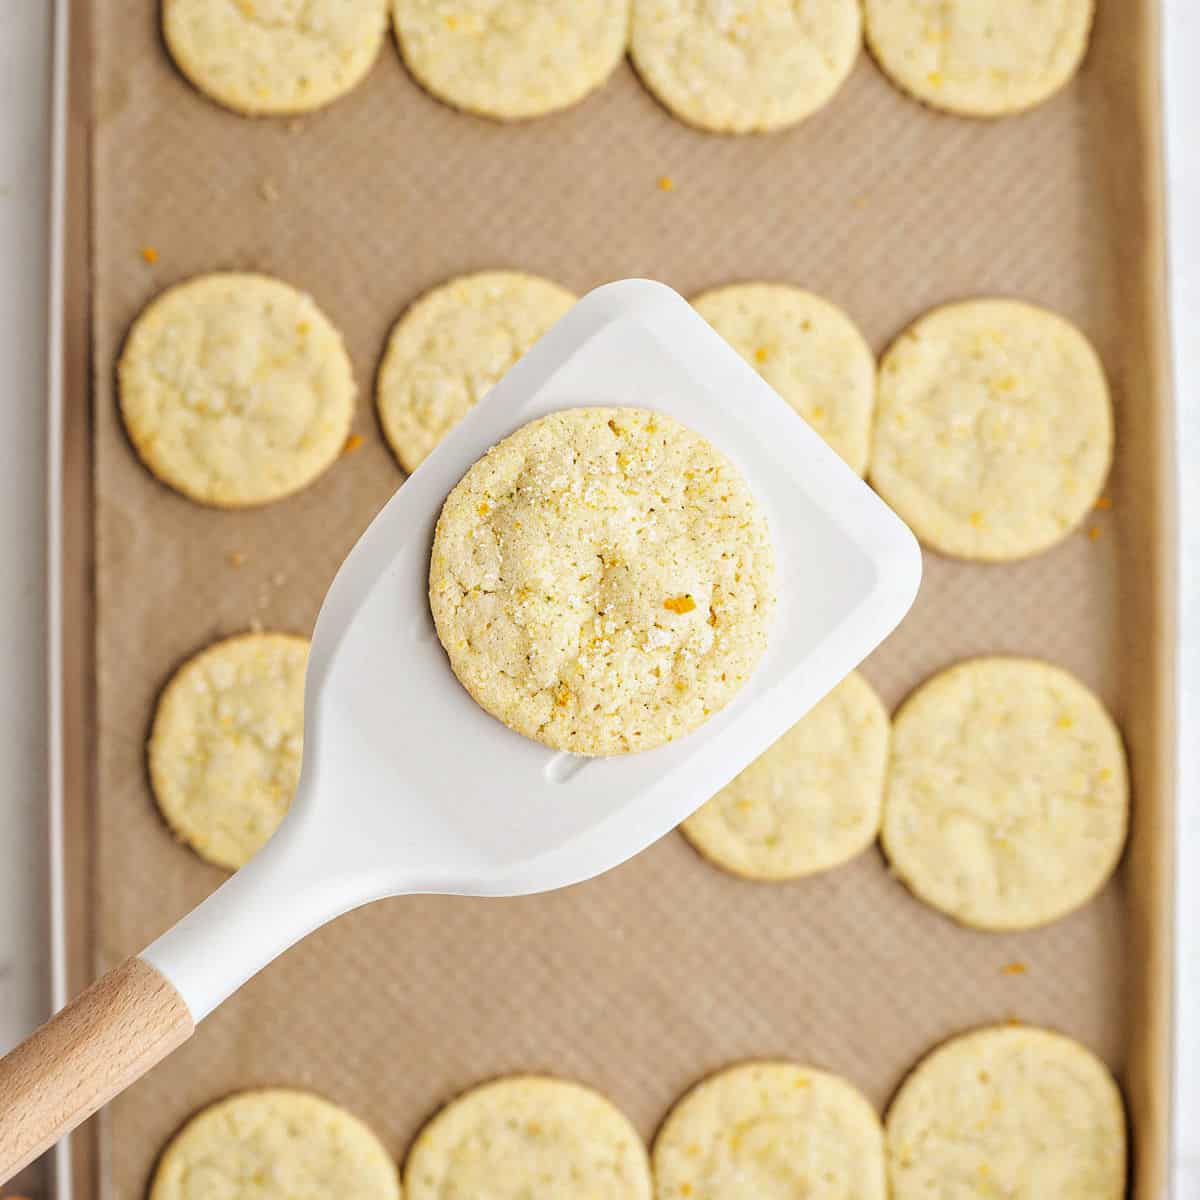 https://www.shugarysweets.com/wp-content/uploads/2013/01/citrus-cookies-recipe.jpg